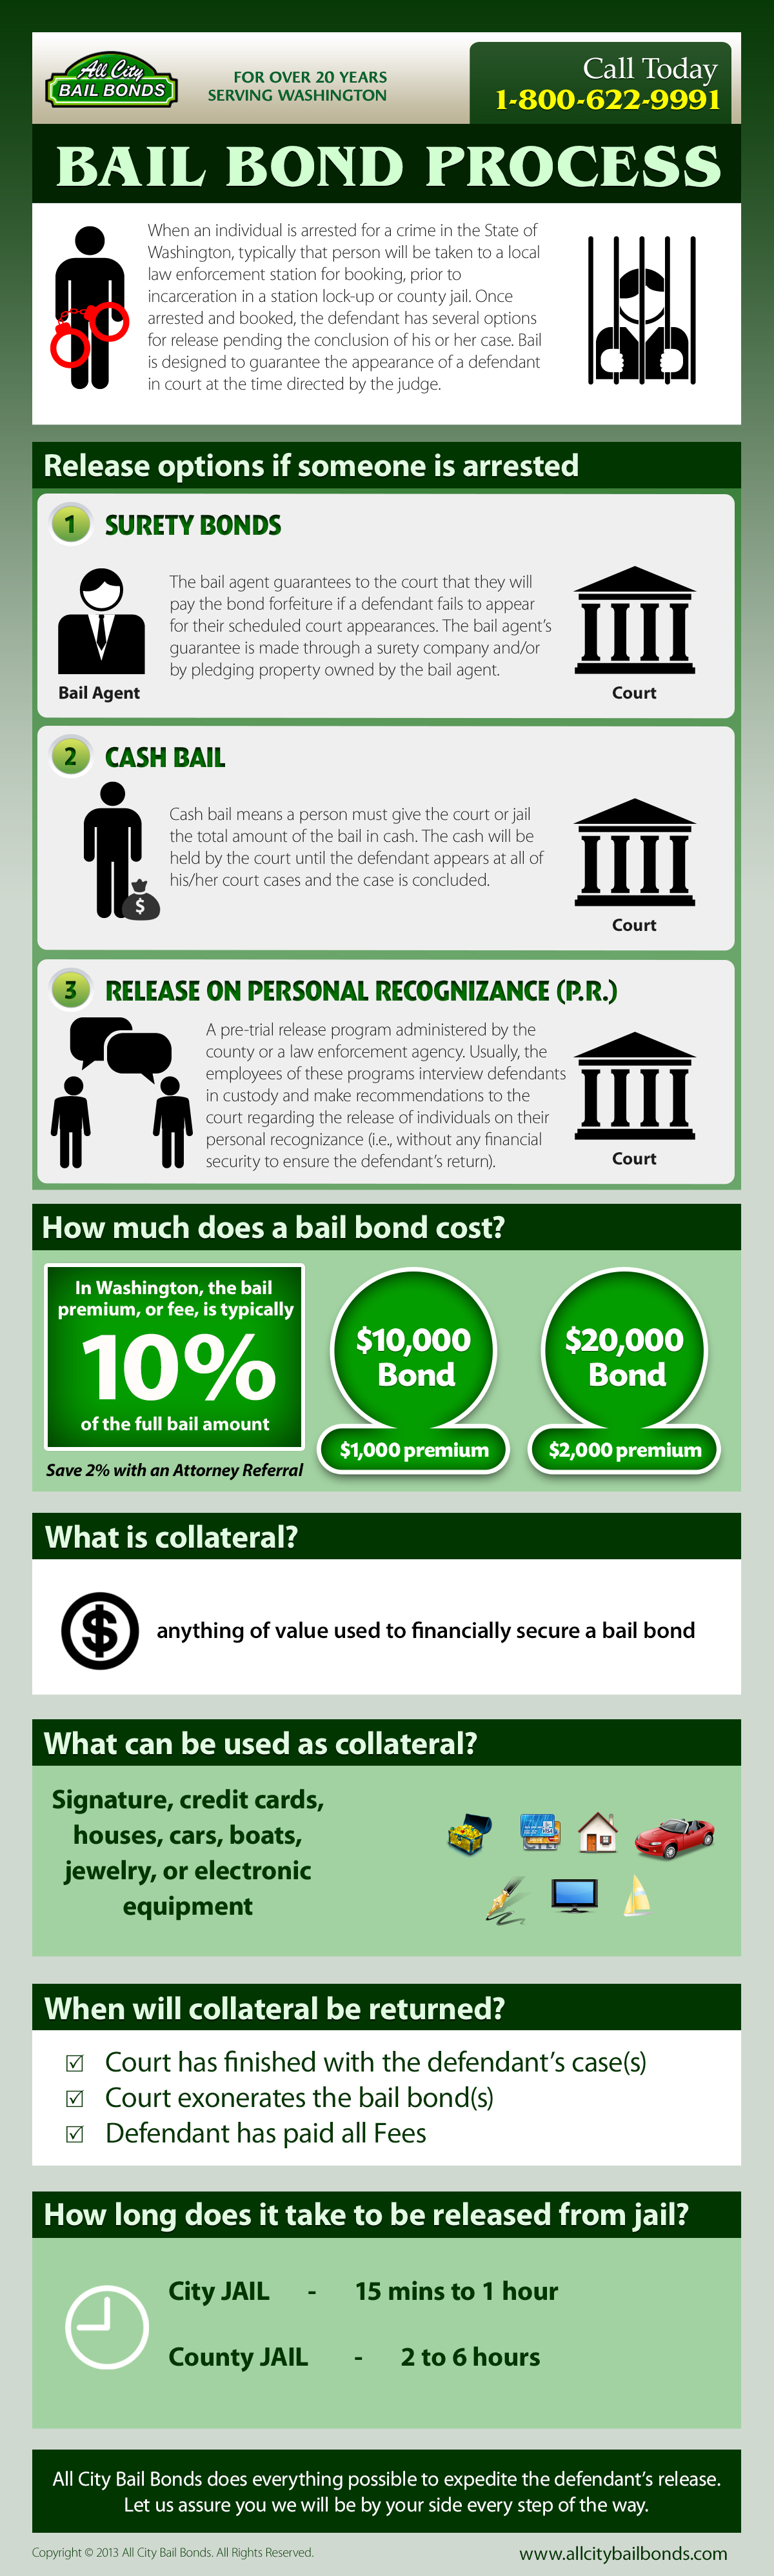 How bail bonds work in Washington